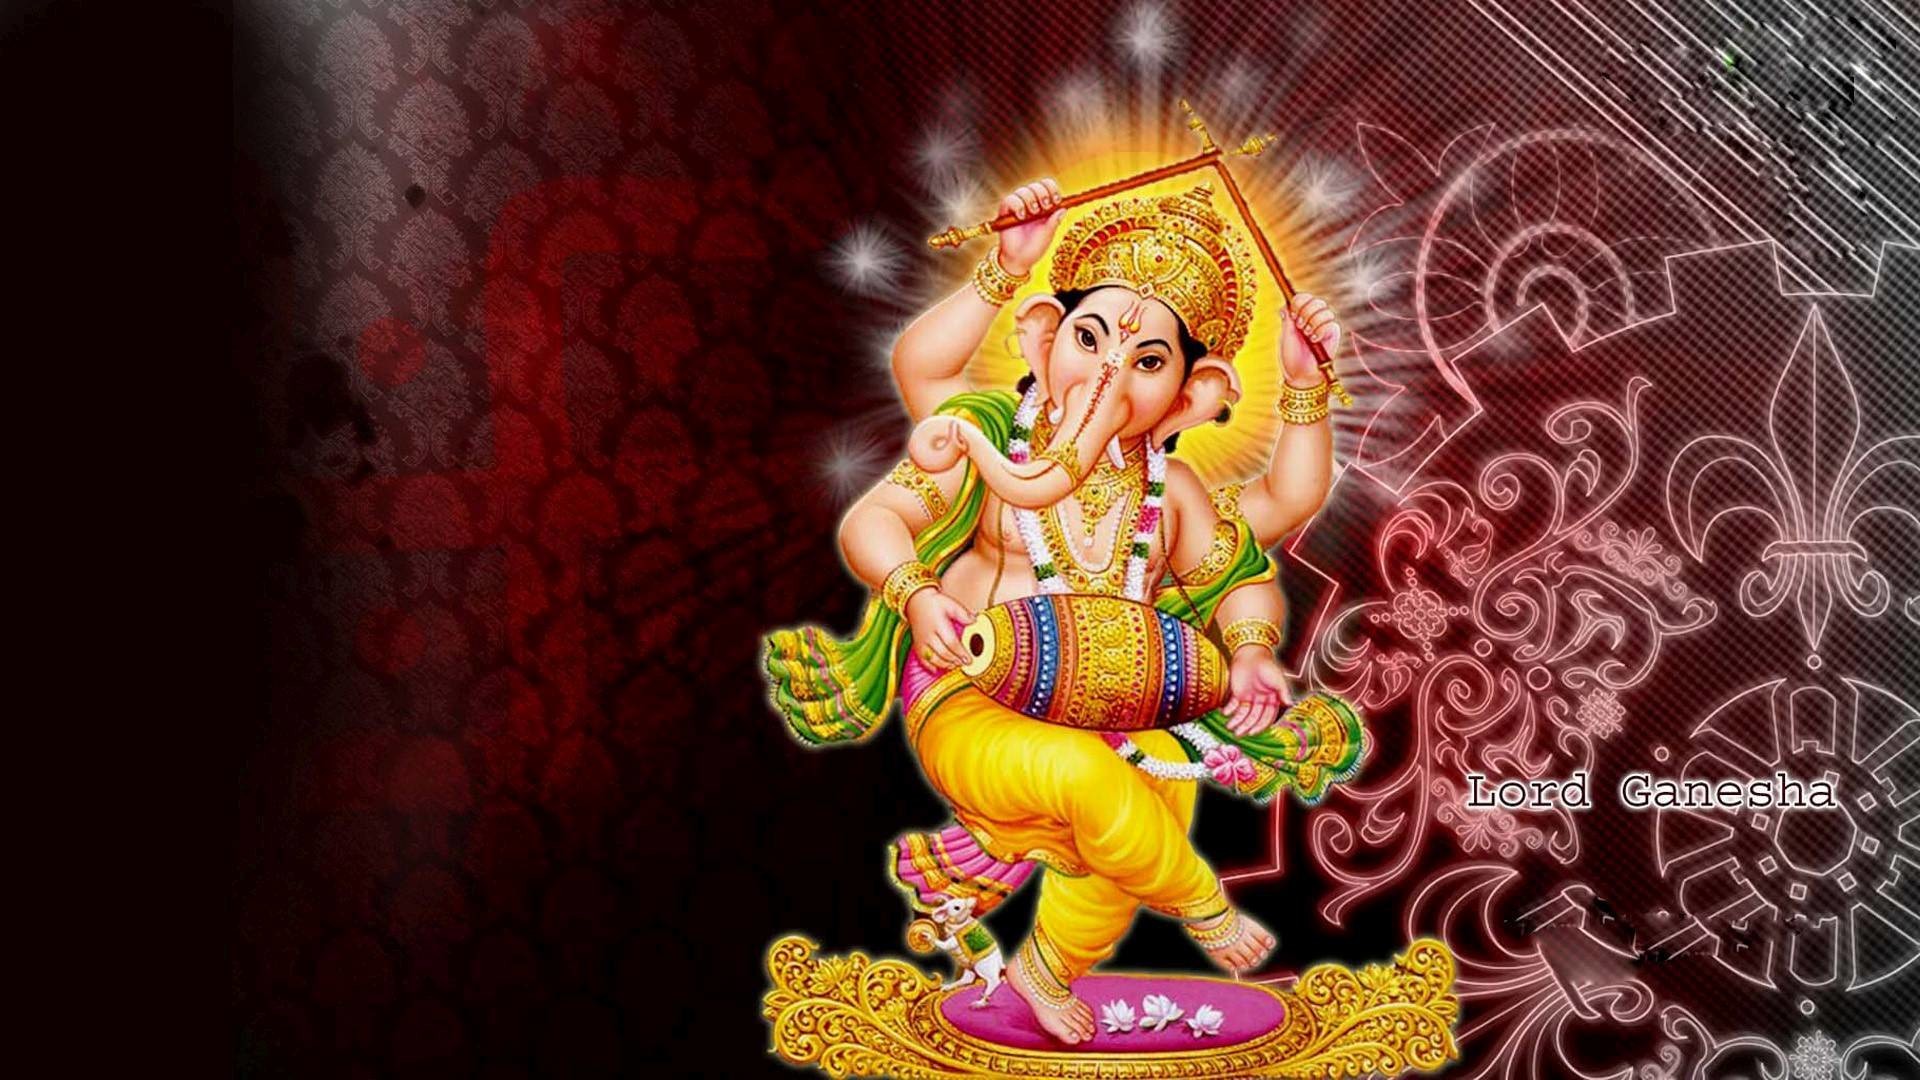 Lord Ganesha 1080p Indian God HD Desktop Wallpapers